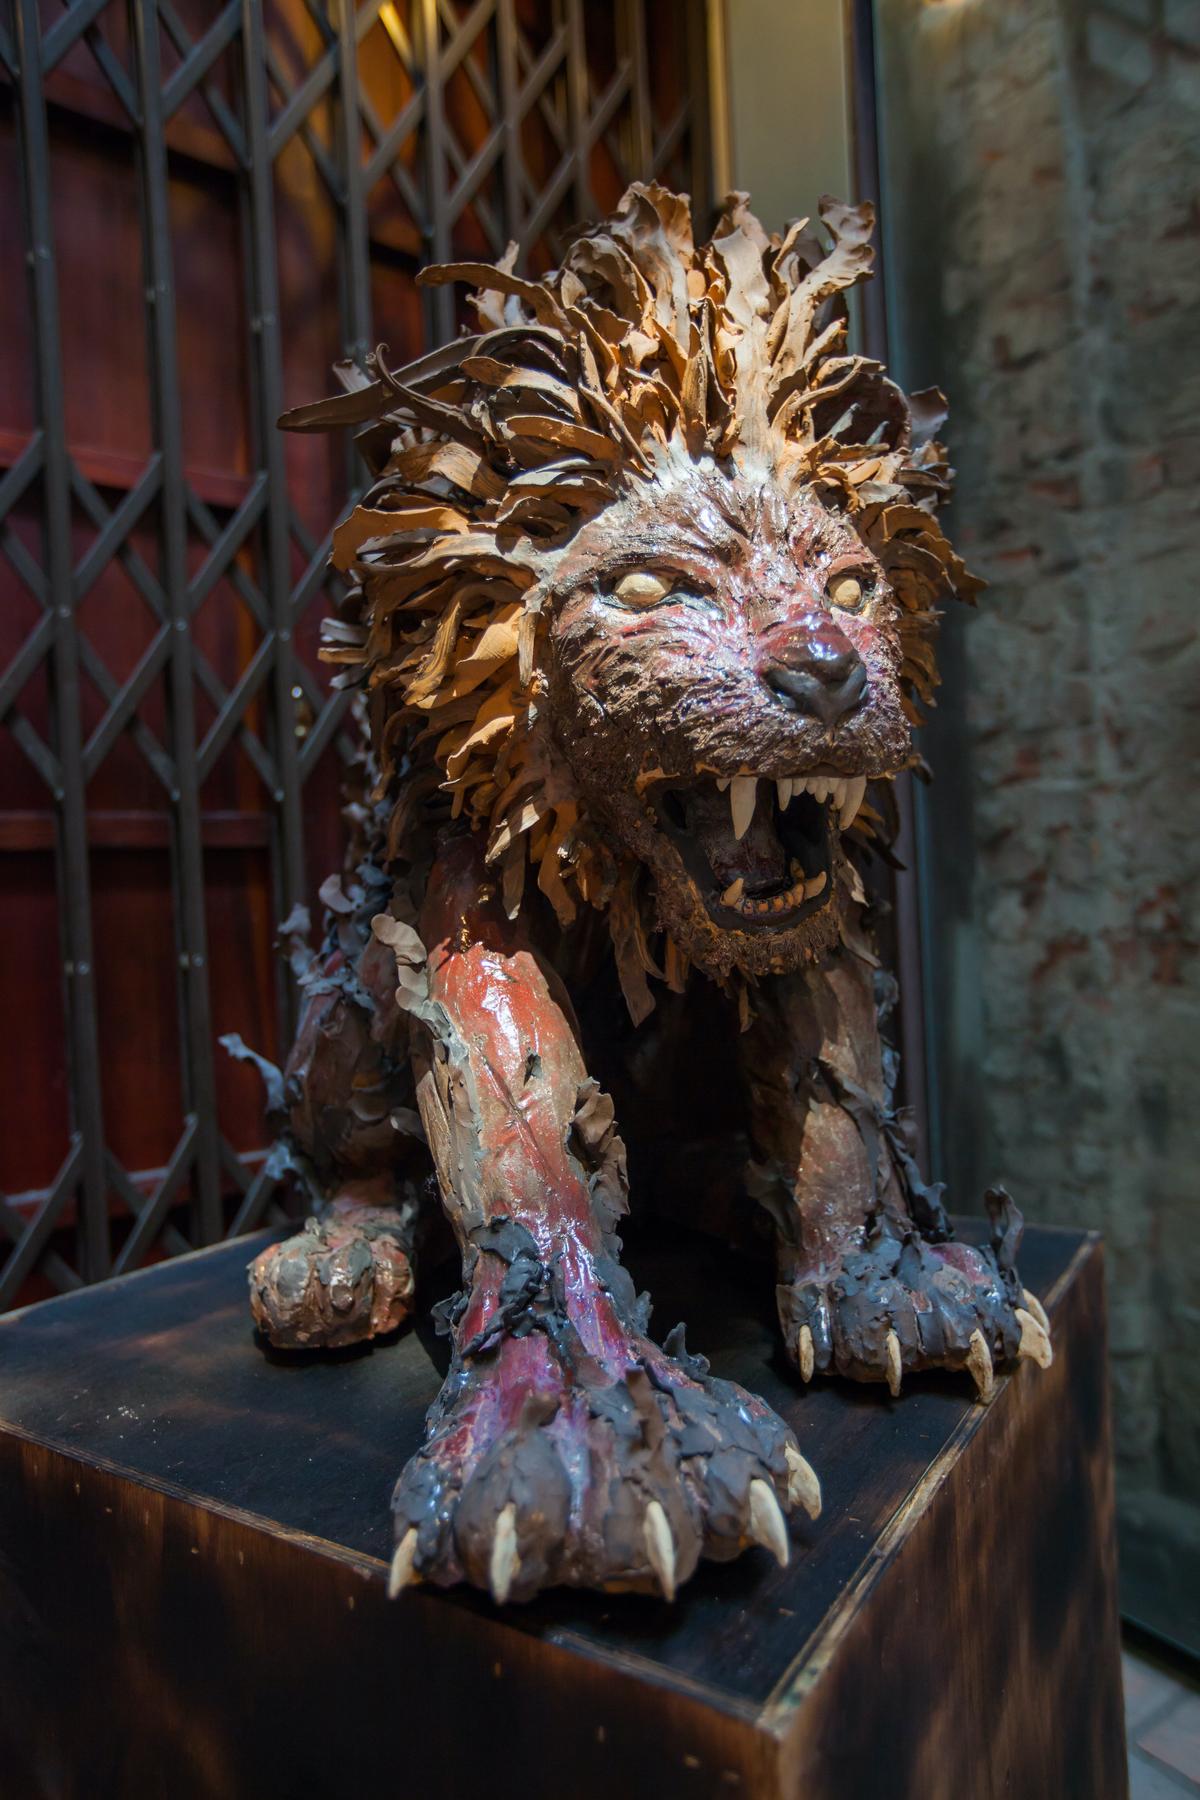 The injured lion. (Courtesy of Hsu Ting Chia)